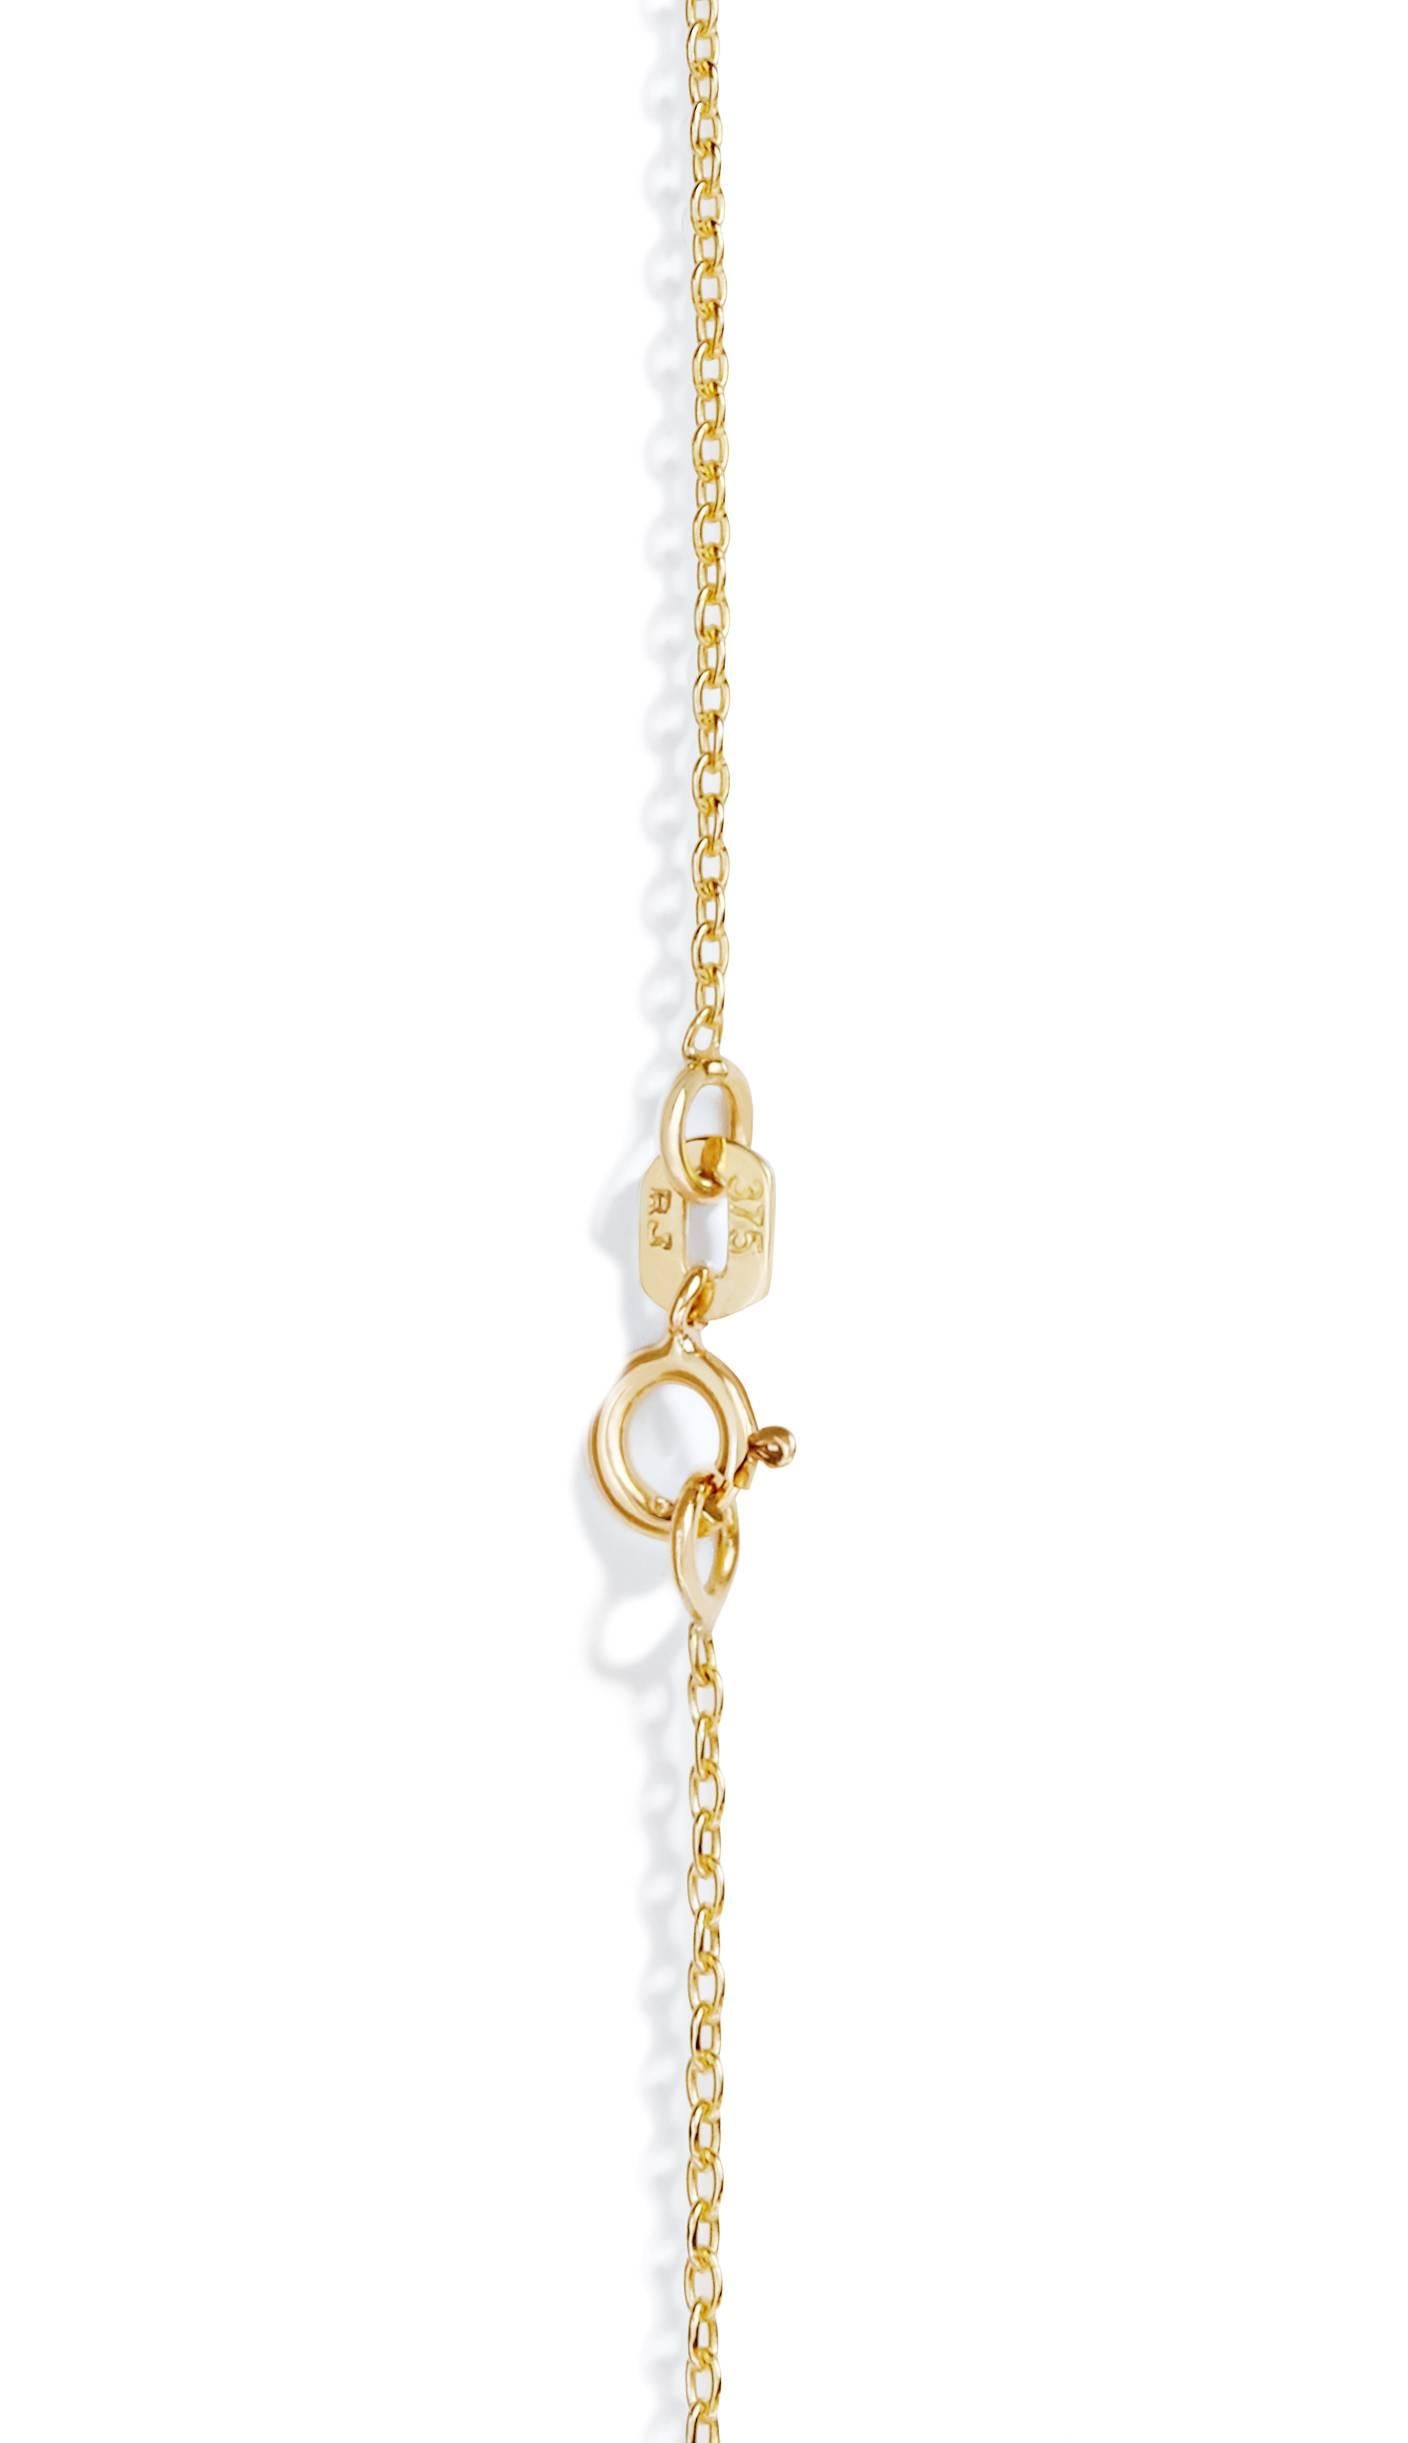 Rose Cut Diamond Slice Pendant Necklace in 18 Karat Gold by Allison Bryan For Sale